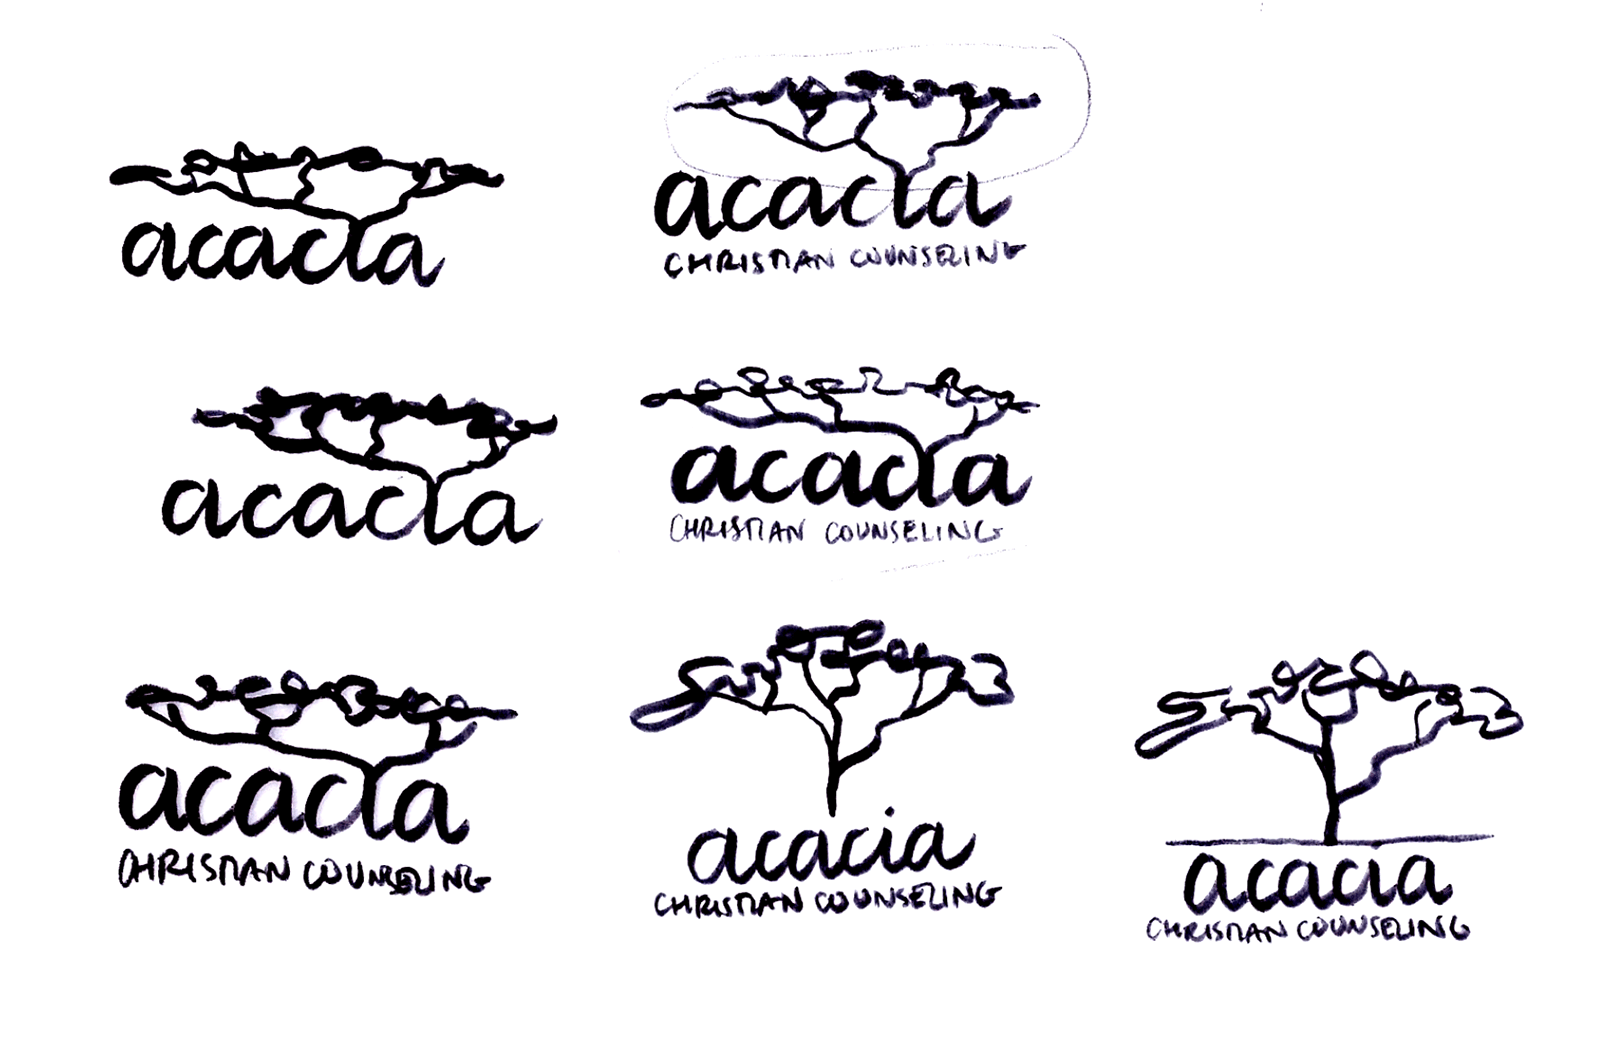 Logo design process